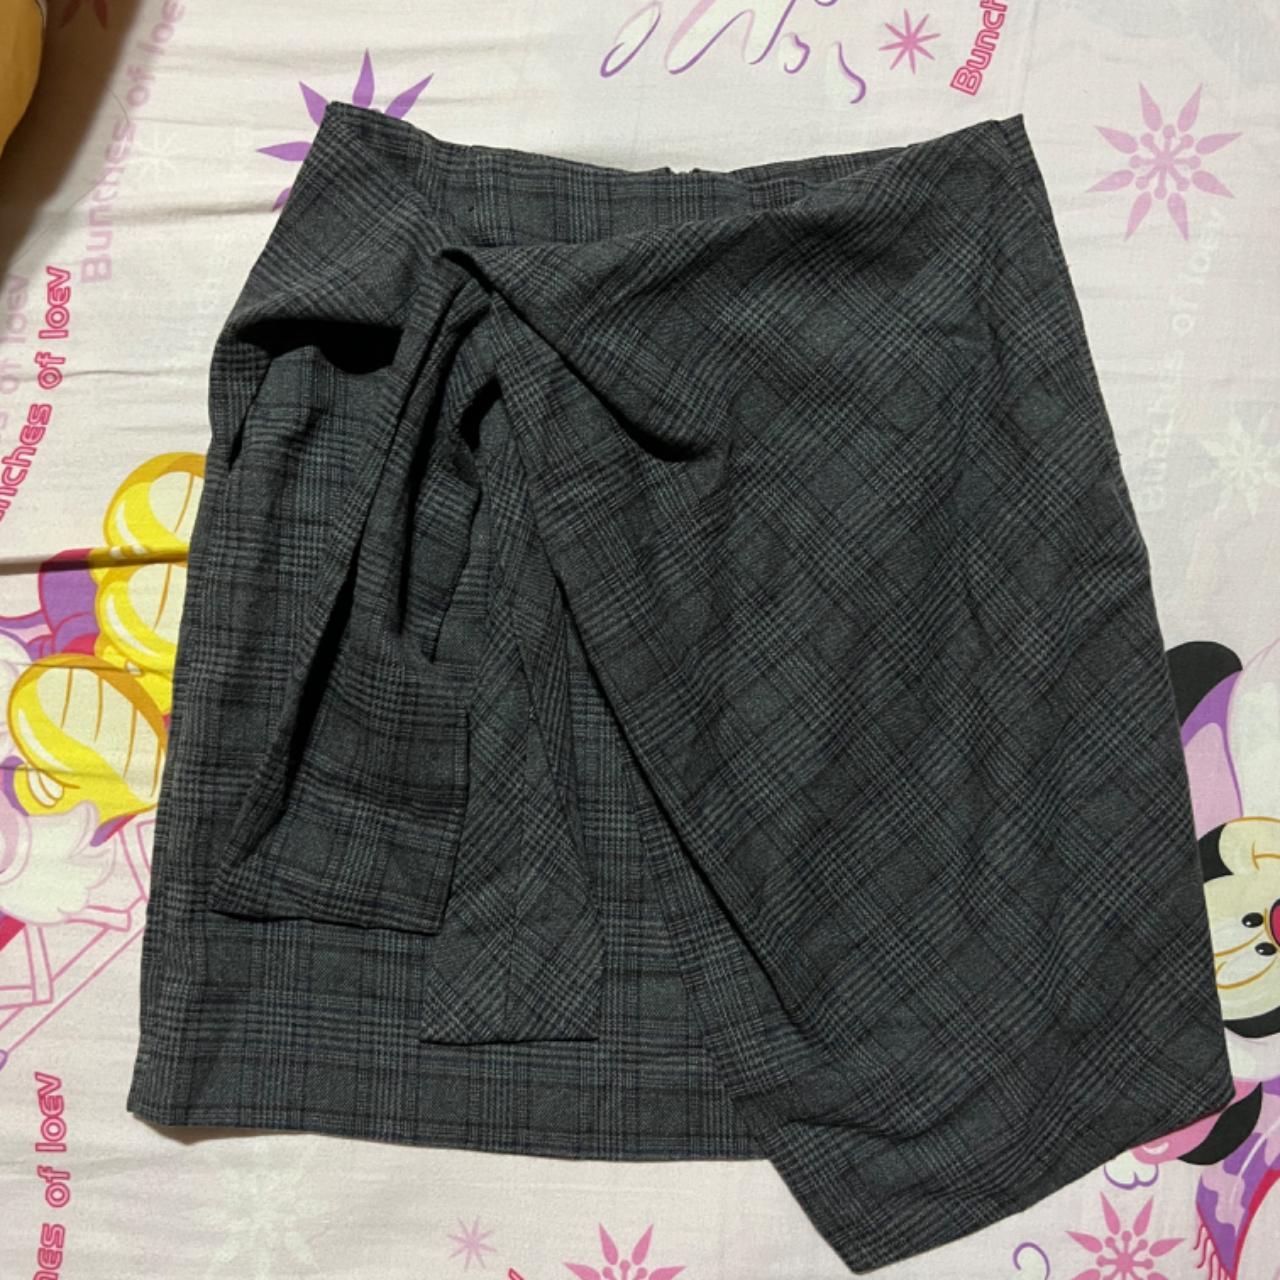 Product Image 4 - Stylenanda Plaid Skirt

Plaid skirt for